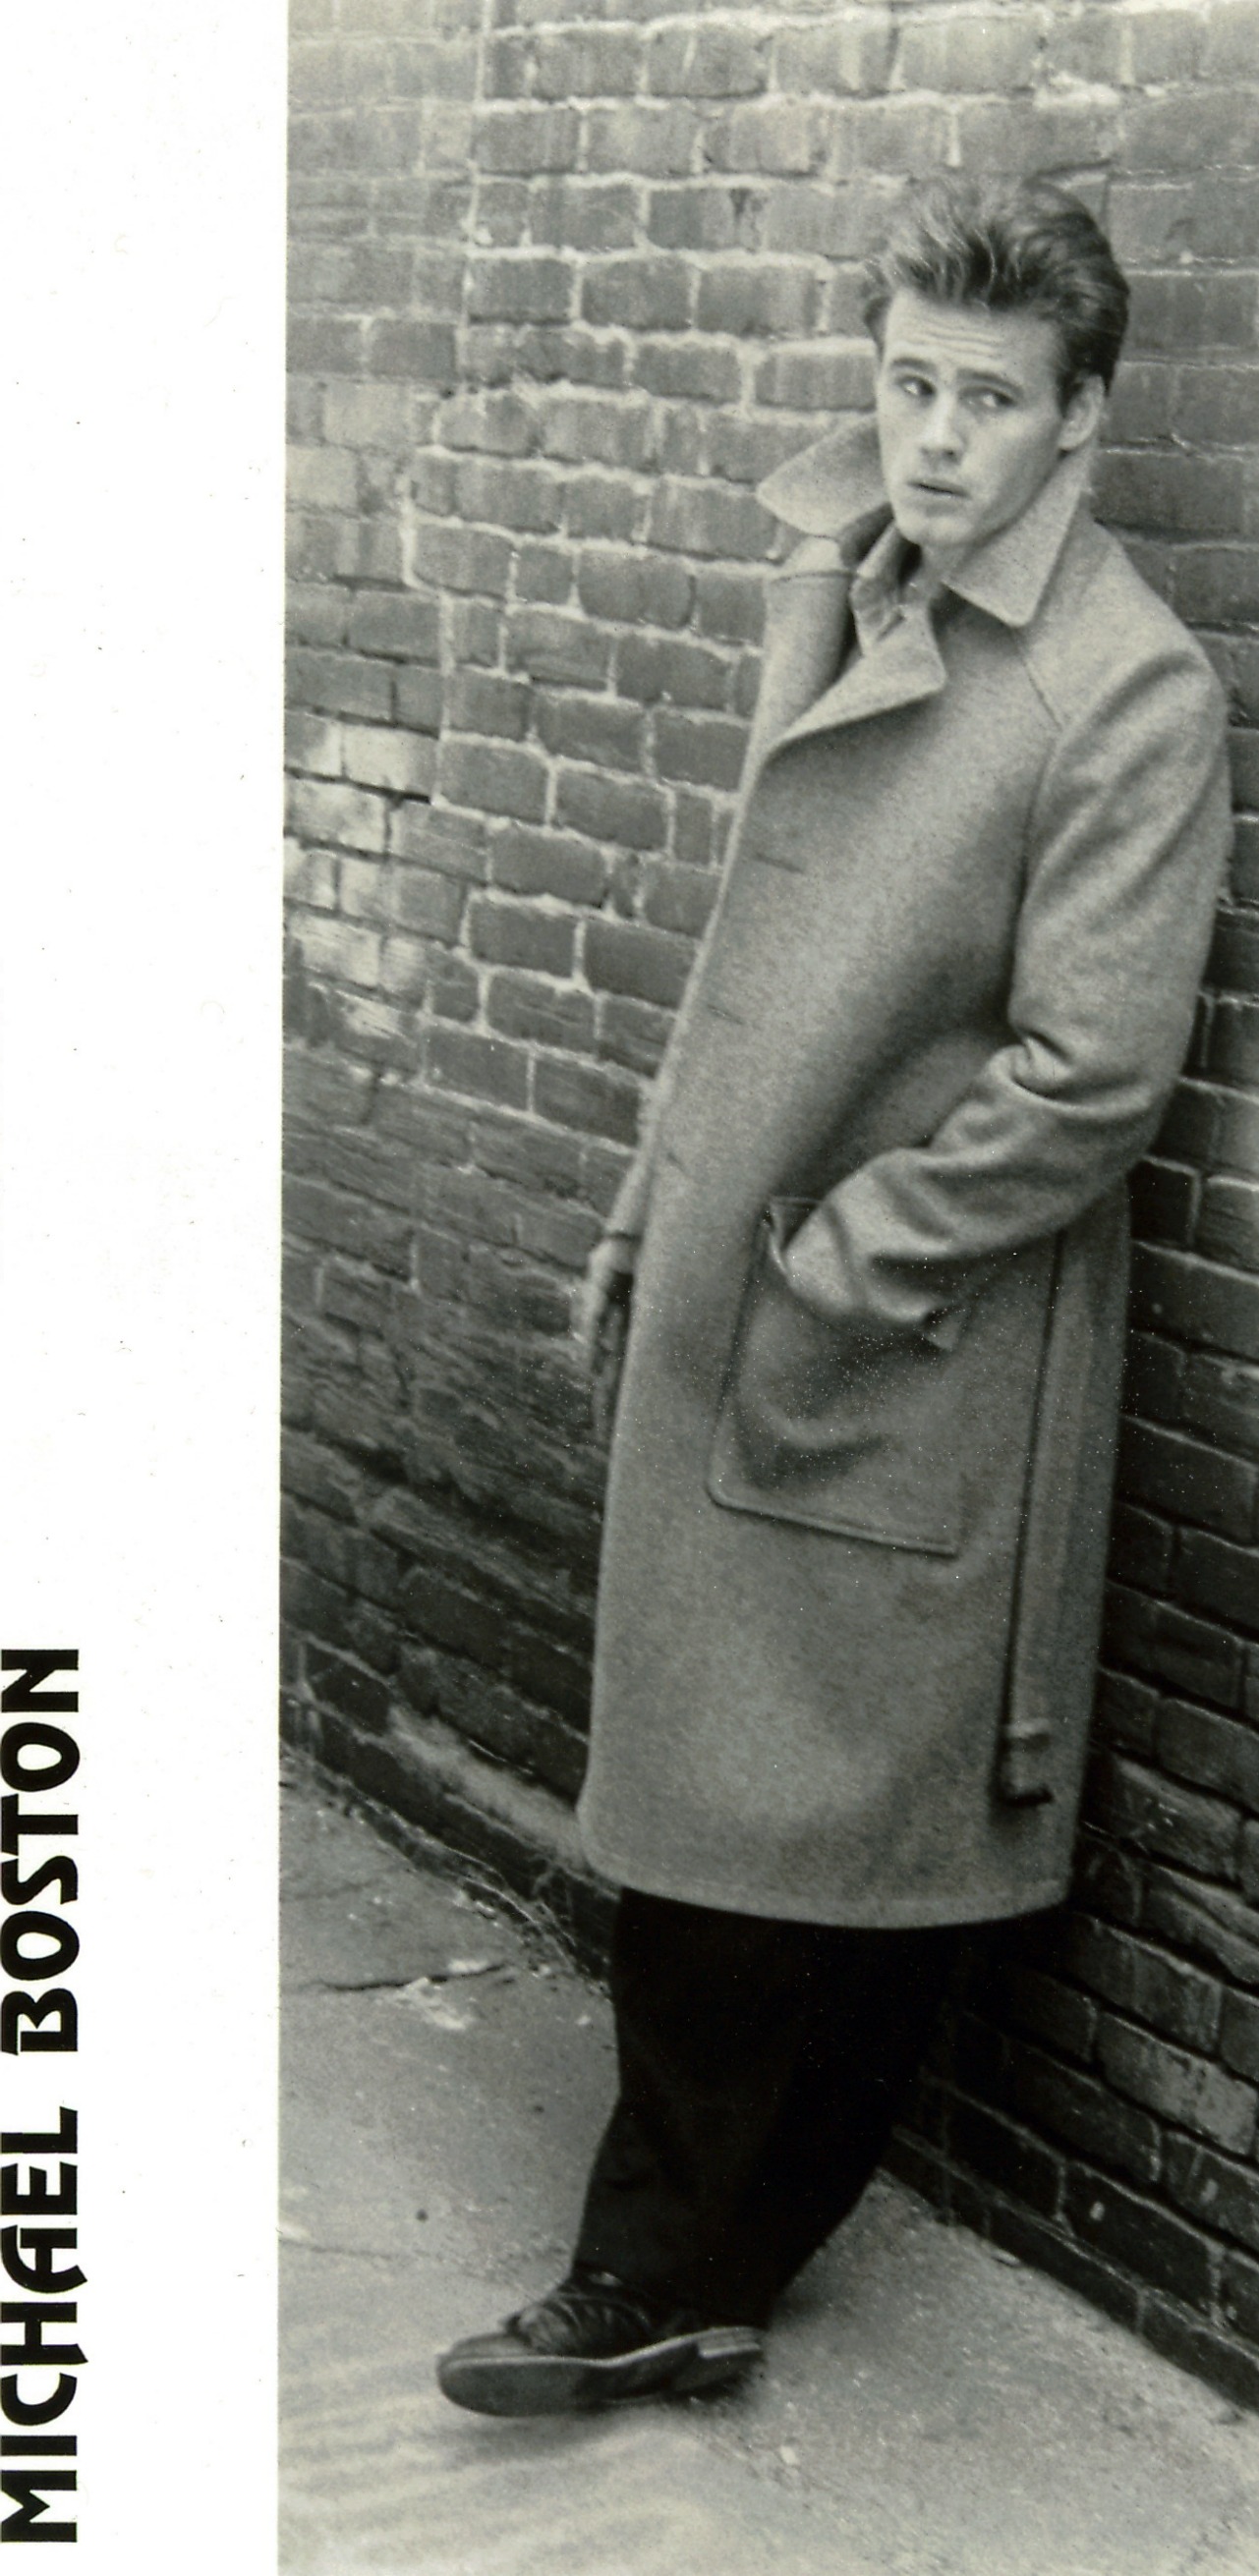 James Dean contest winner, 1995